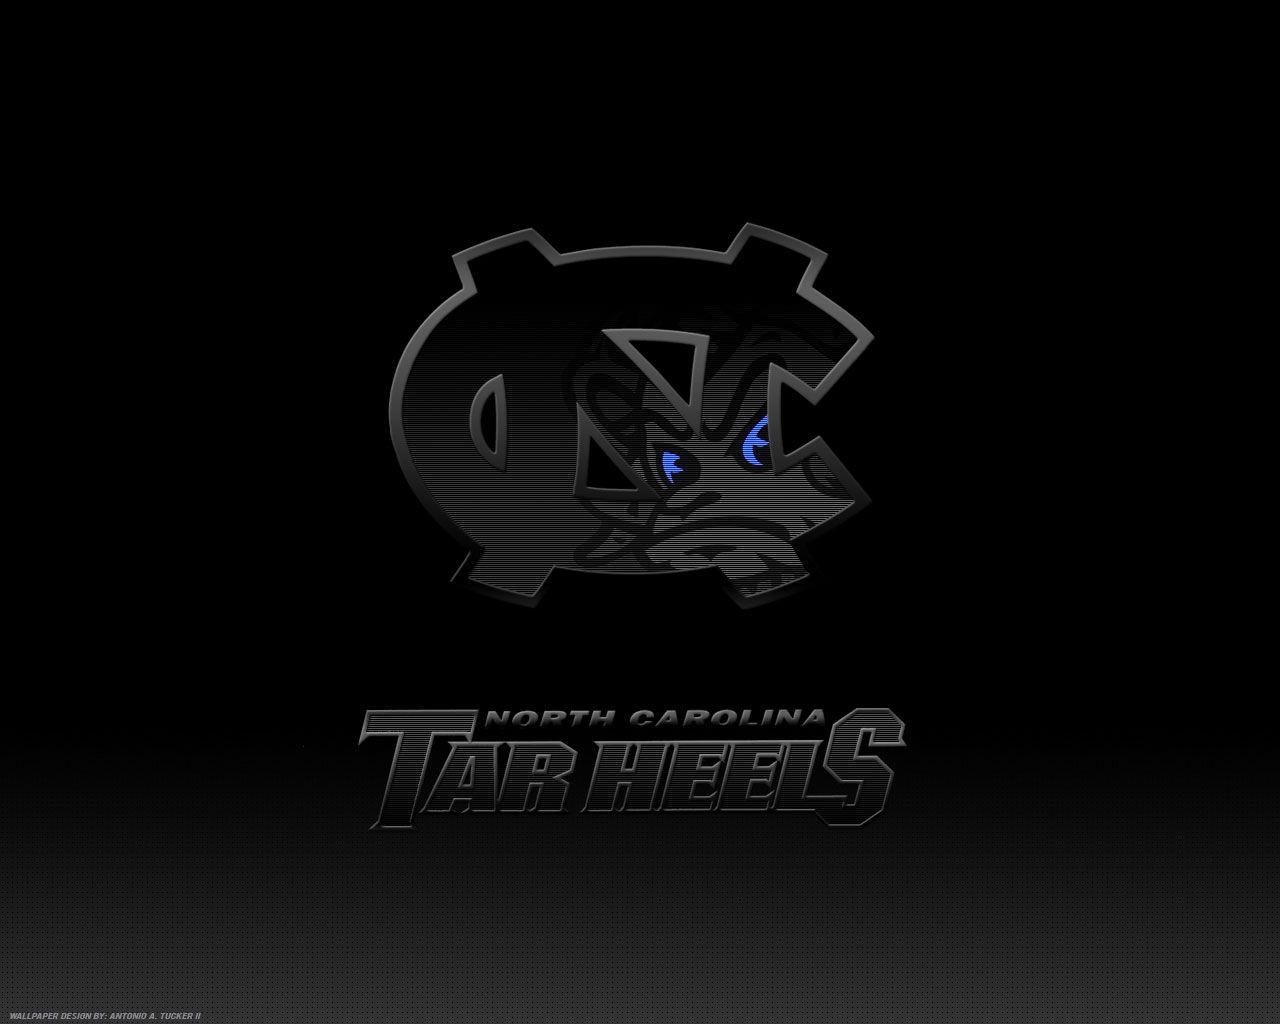 Tar Heels Logo - UNC Tar Heels Logo background wallpaper for desktop or web site. Get